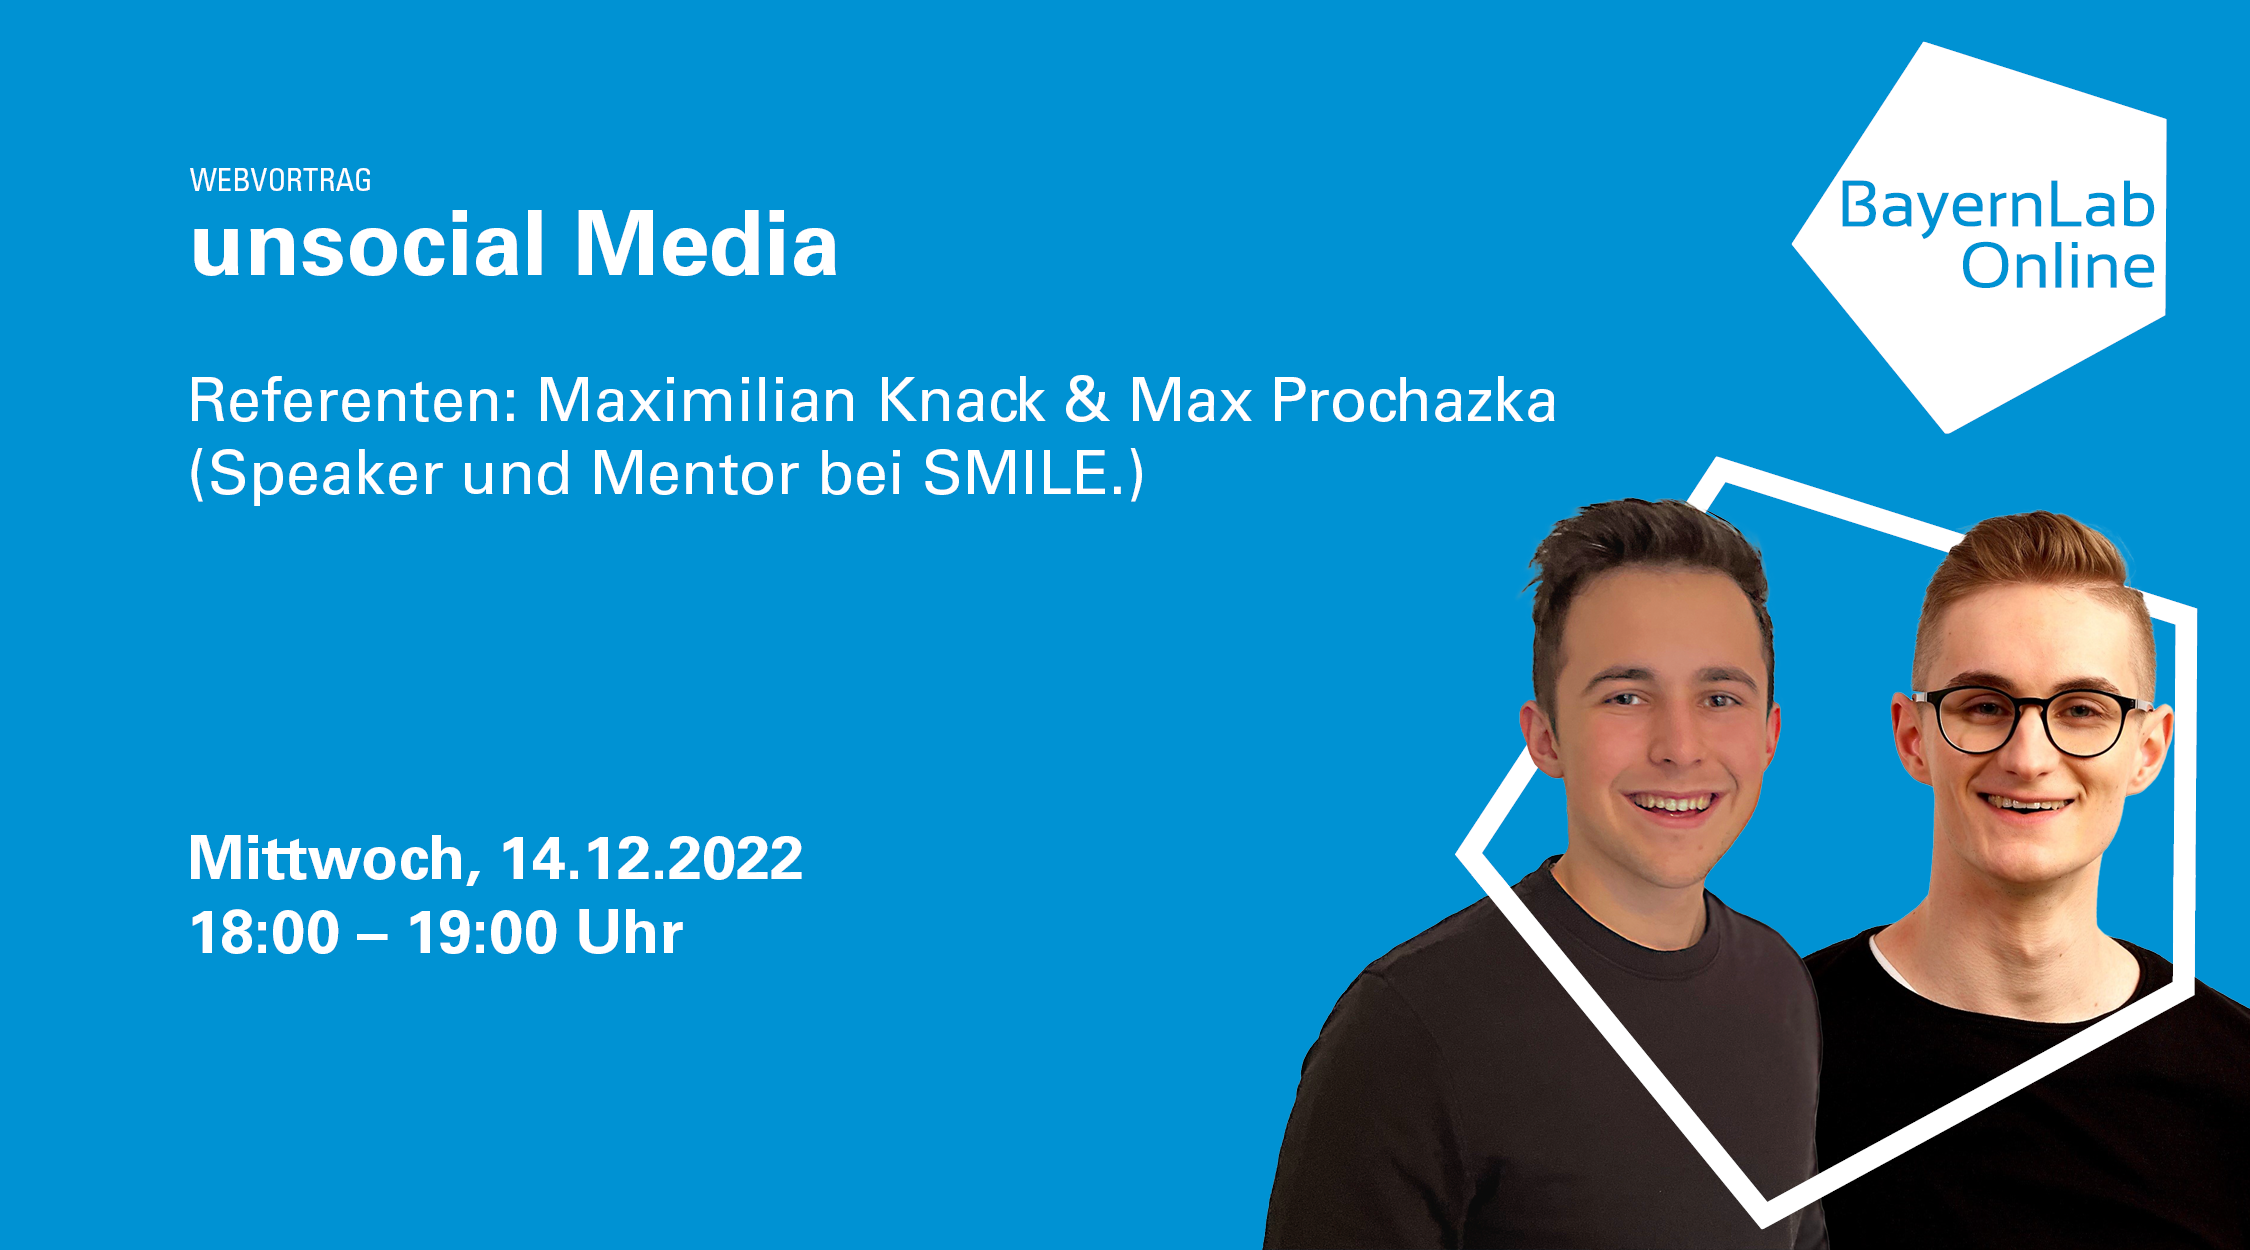 OnlineVortrag zum Thema unsocial Media mit den Referenten Maximilian Knack und Max Prochazka am 14.12.2022 um 18.00 Uhr